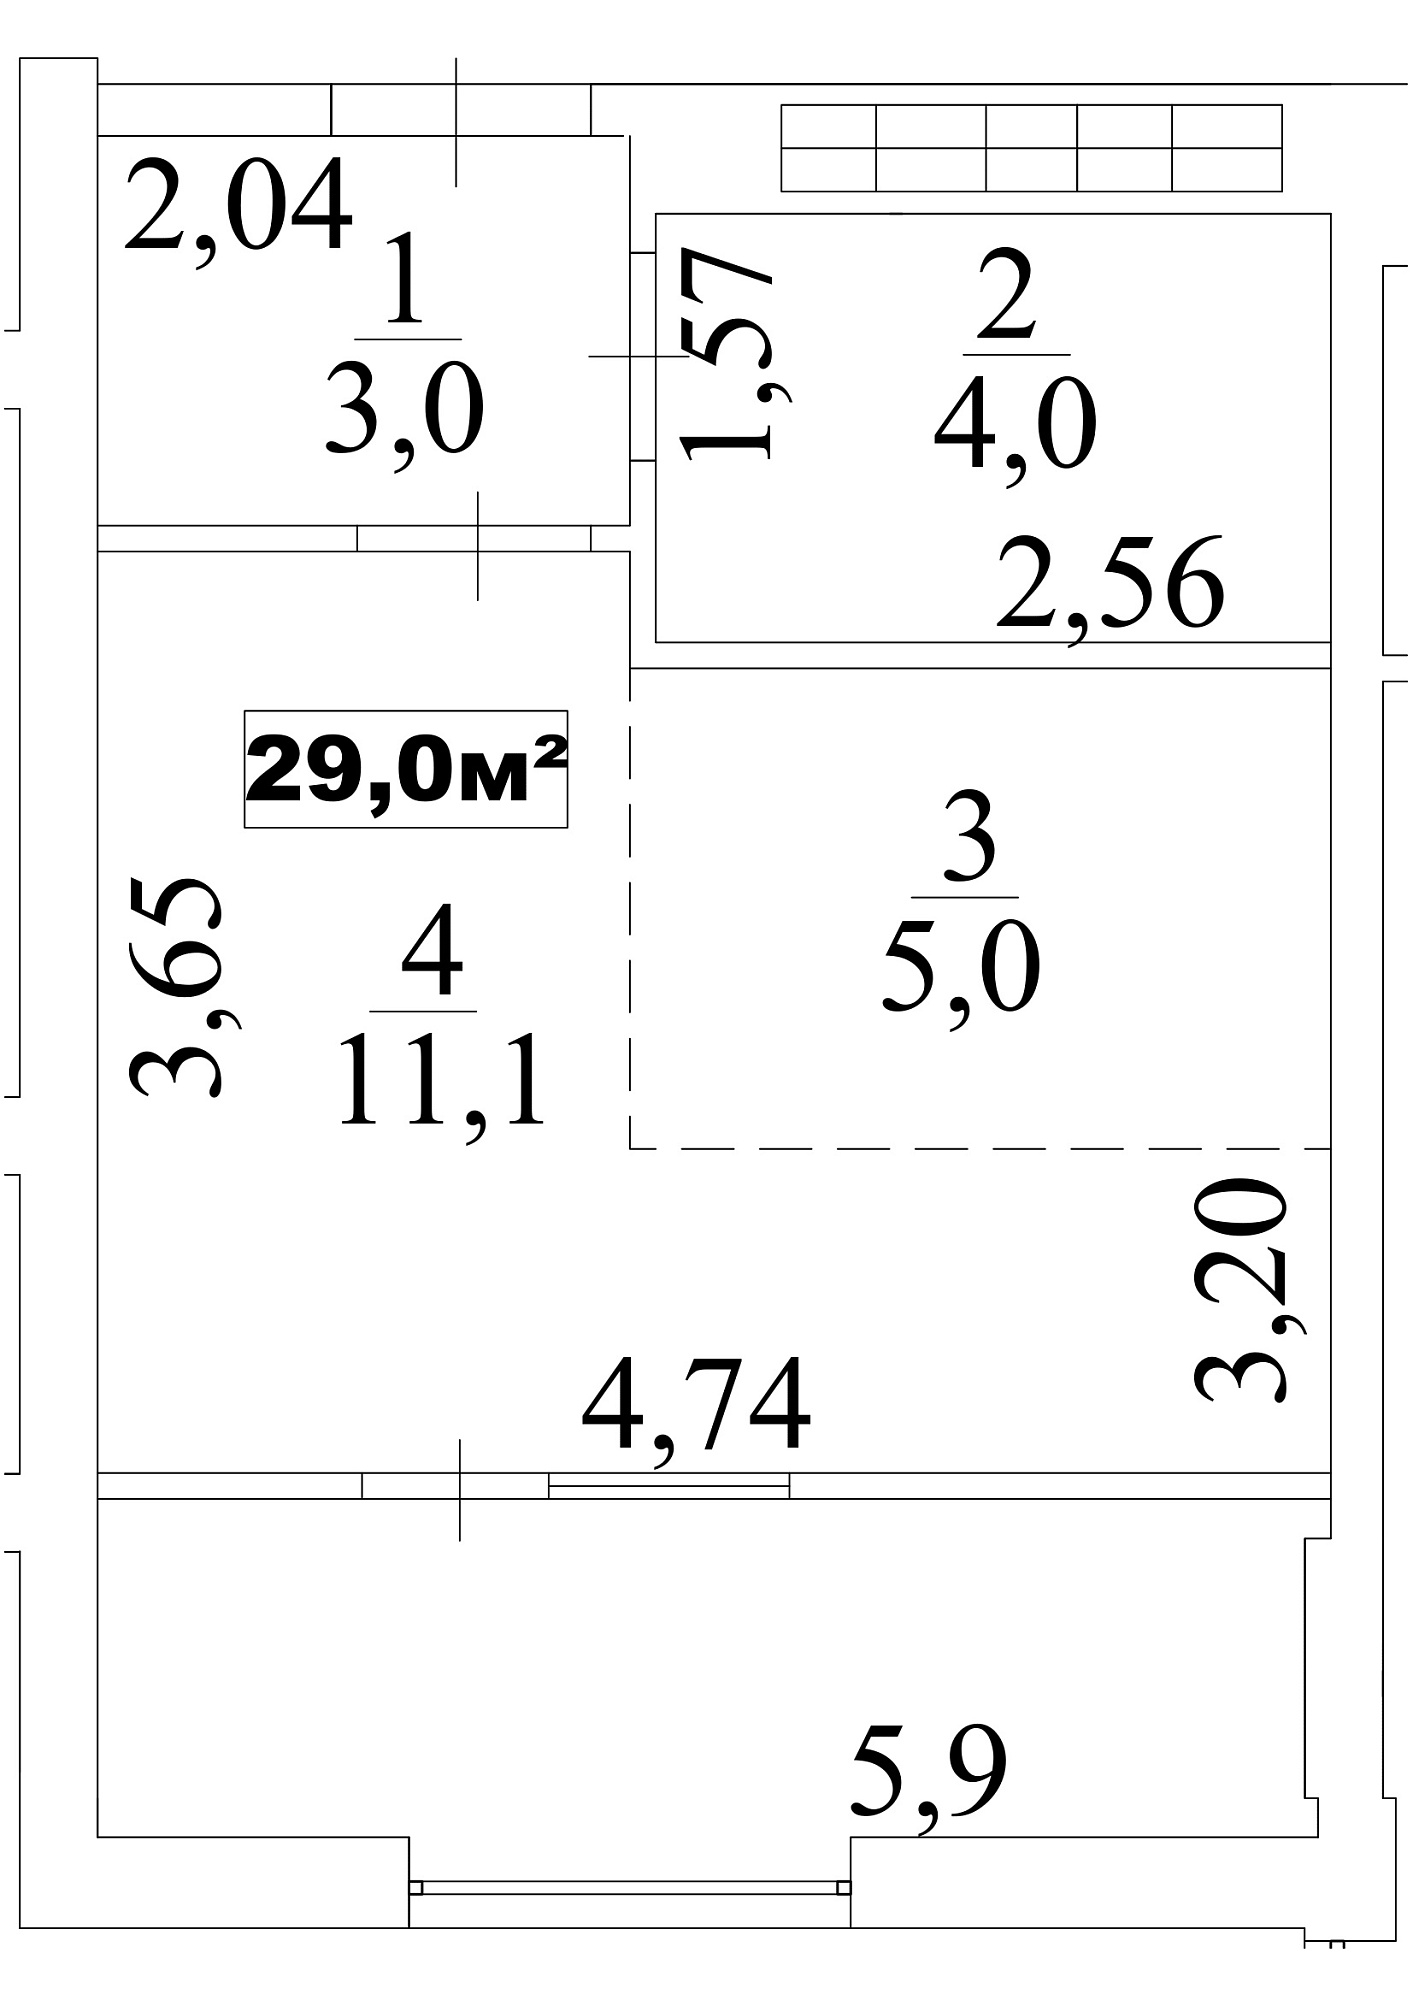 Planning Smart flats area 29m2, AB-10-02/00018.